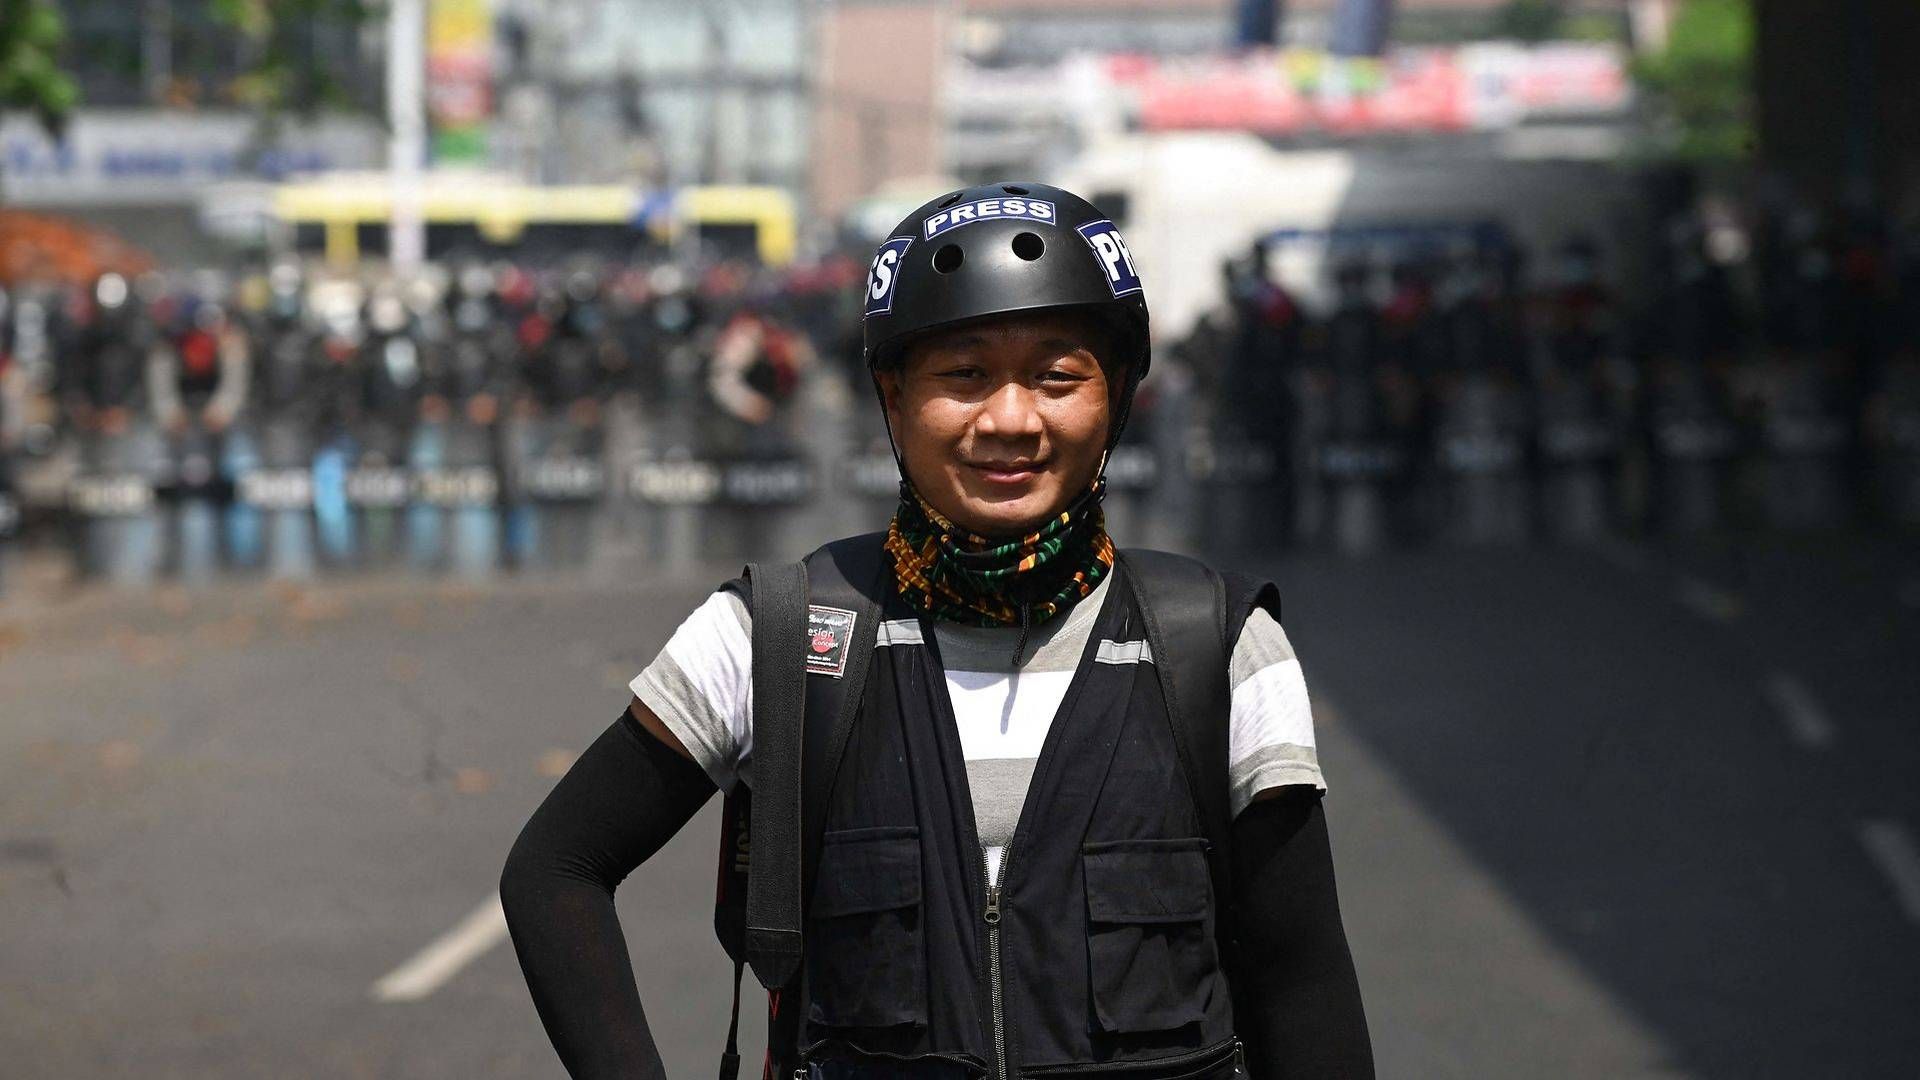 Thein Zaw, der arbejder for AP, er blandt de anholdre pressefolk. | Foto: AFP/Ritzau Scanpix